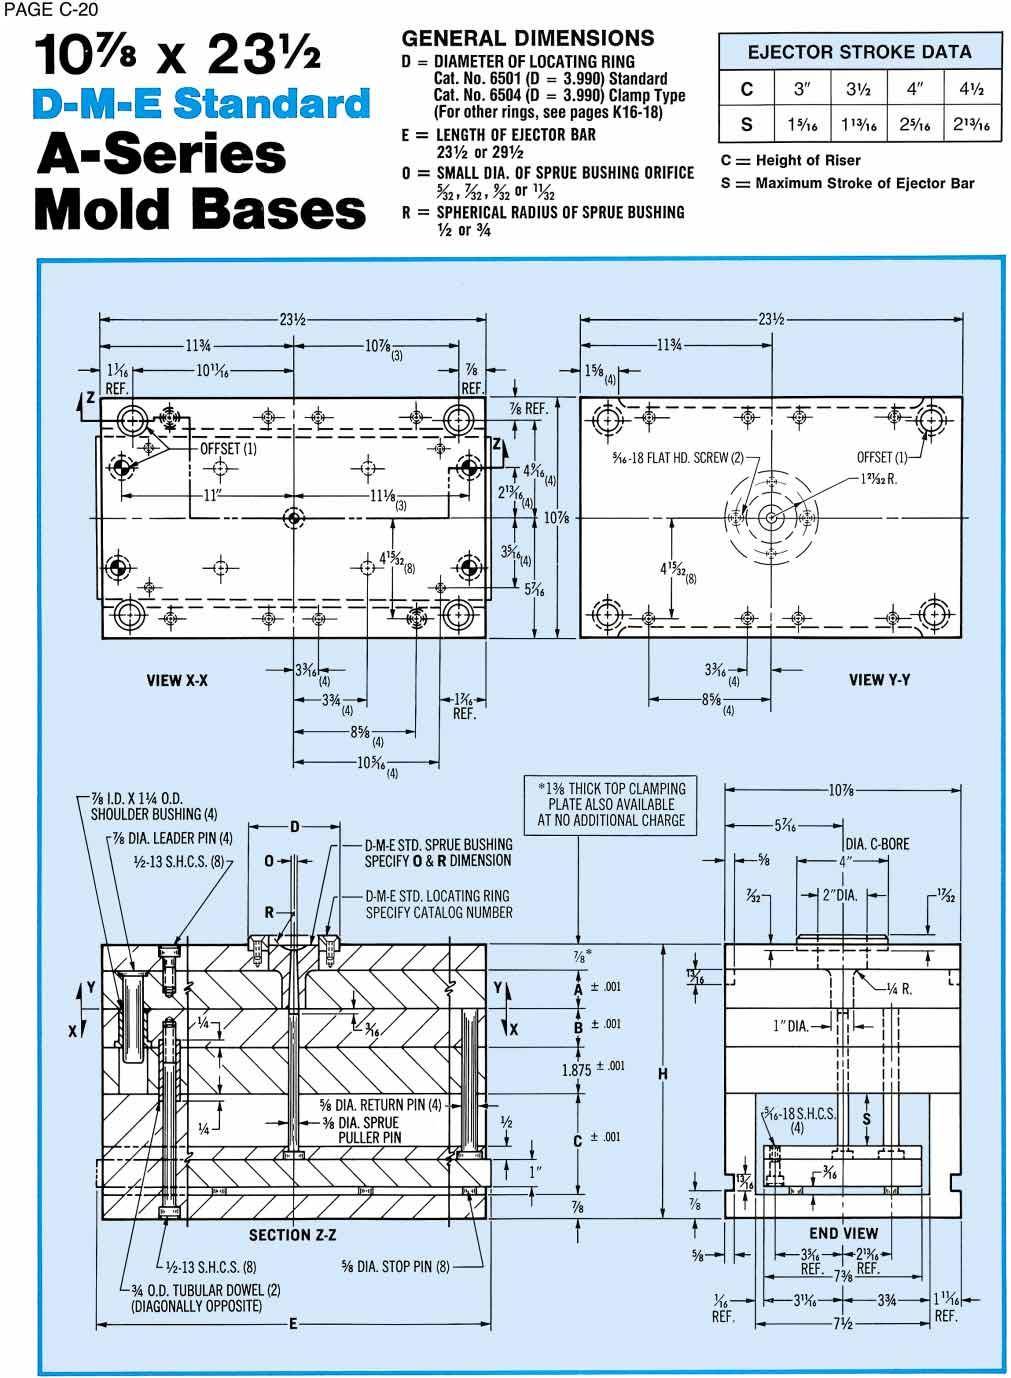 DME A series mold base 1124A